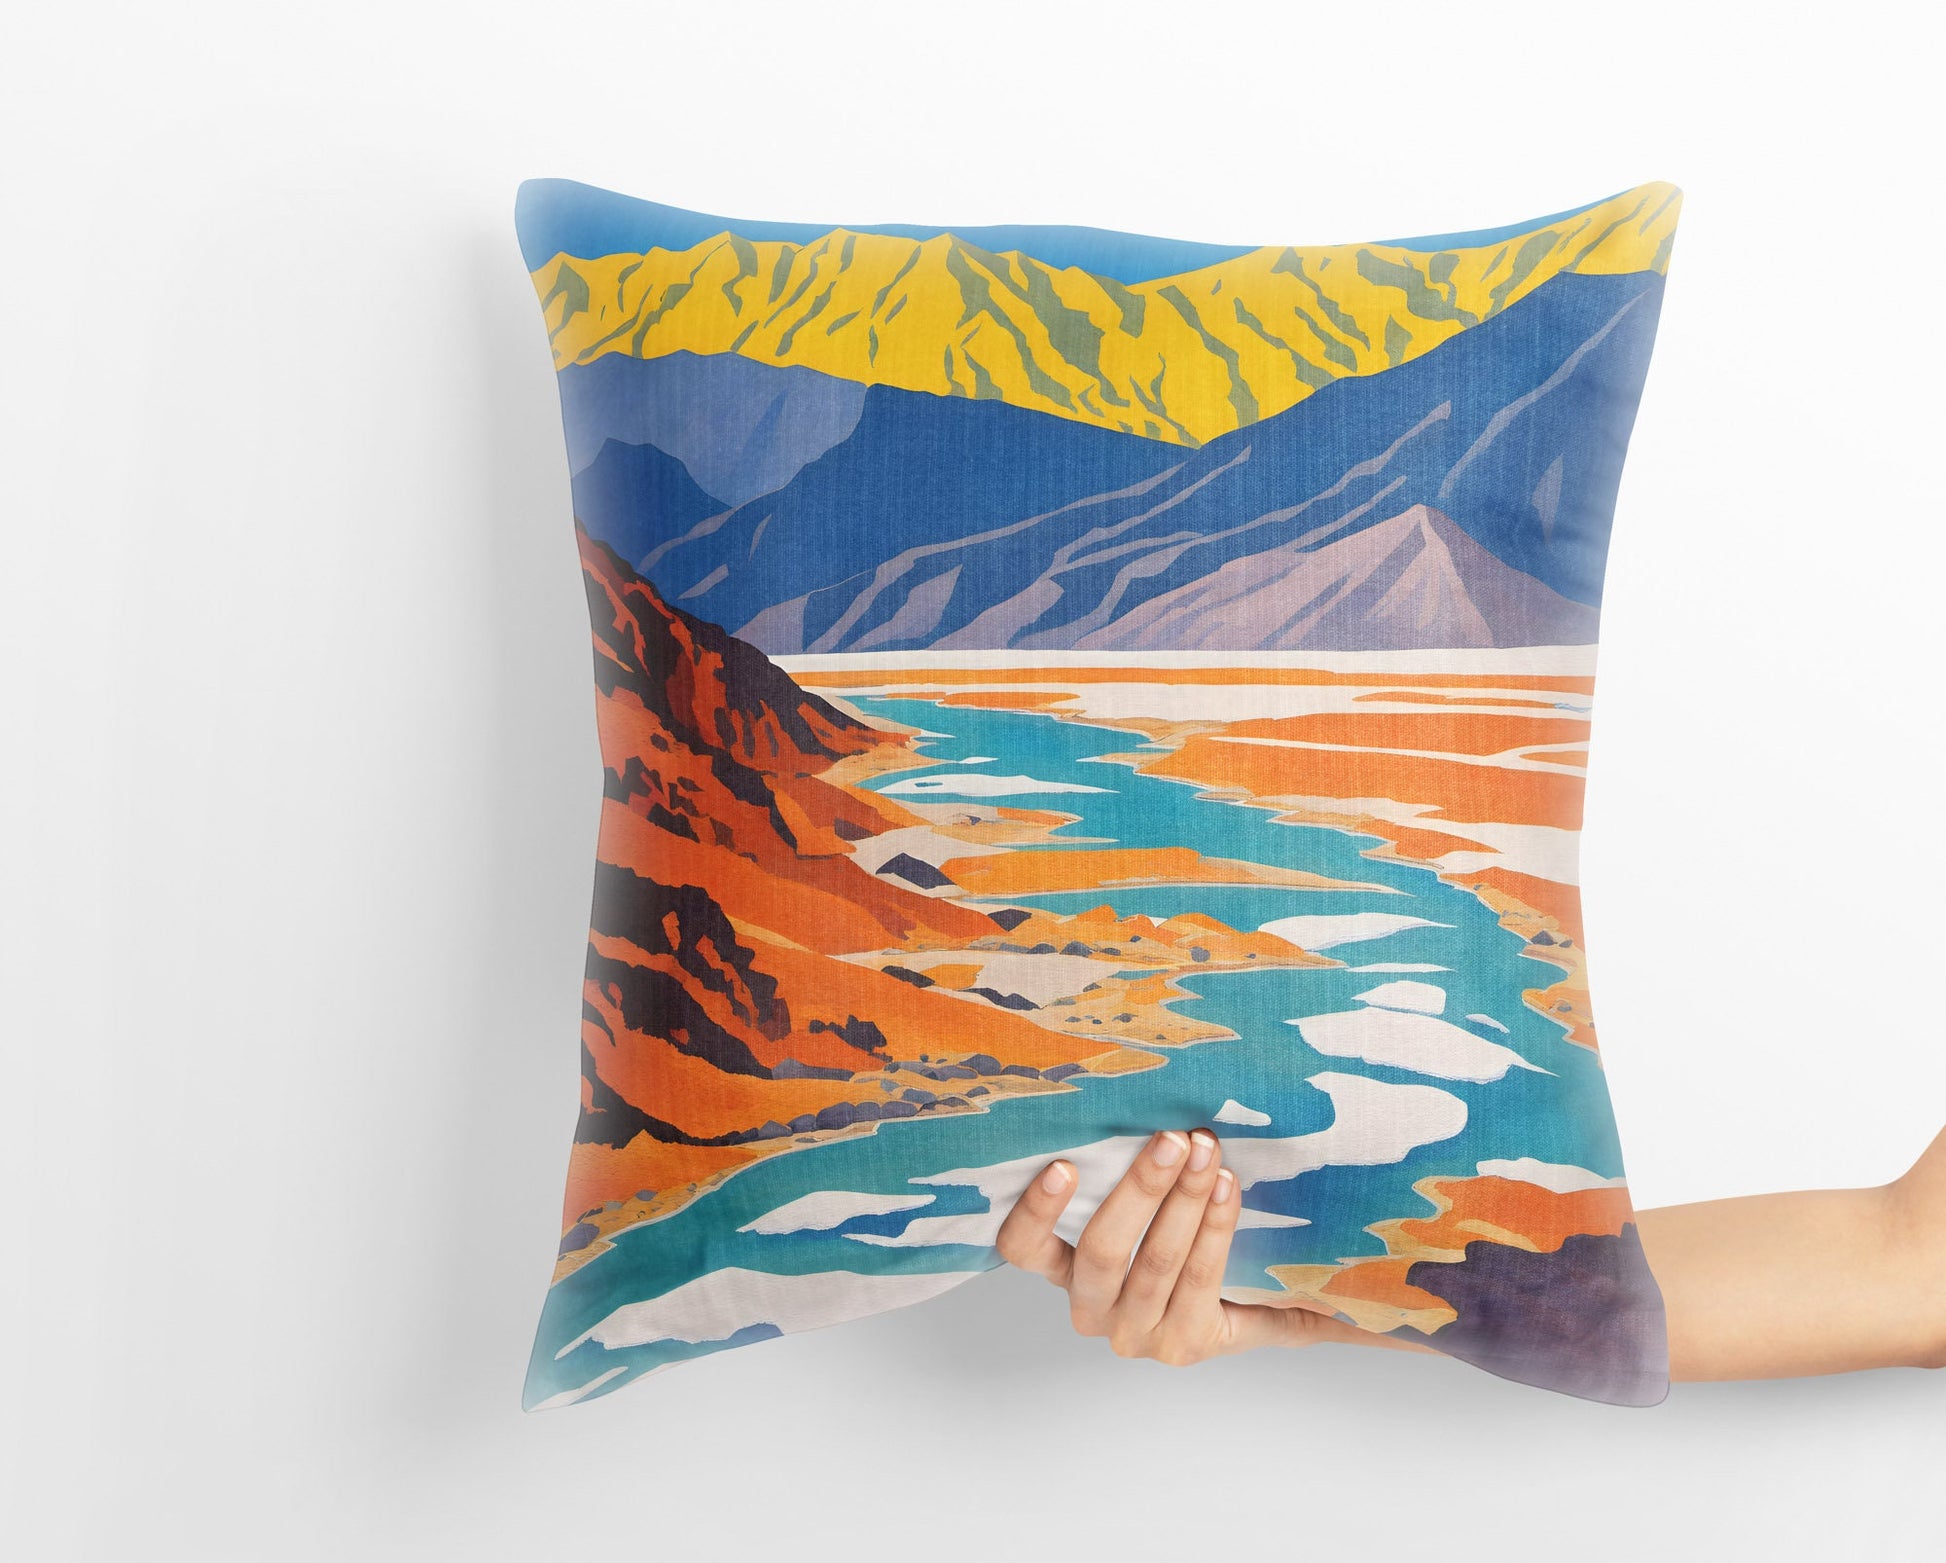 Badwater Basin In Death Valley National Park, California Throw Pillow, Usa Travel Pillow, Designer Pillow, 20X20 Pillow Cover